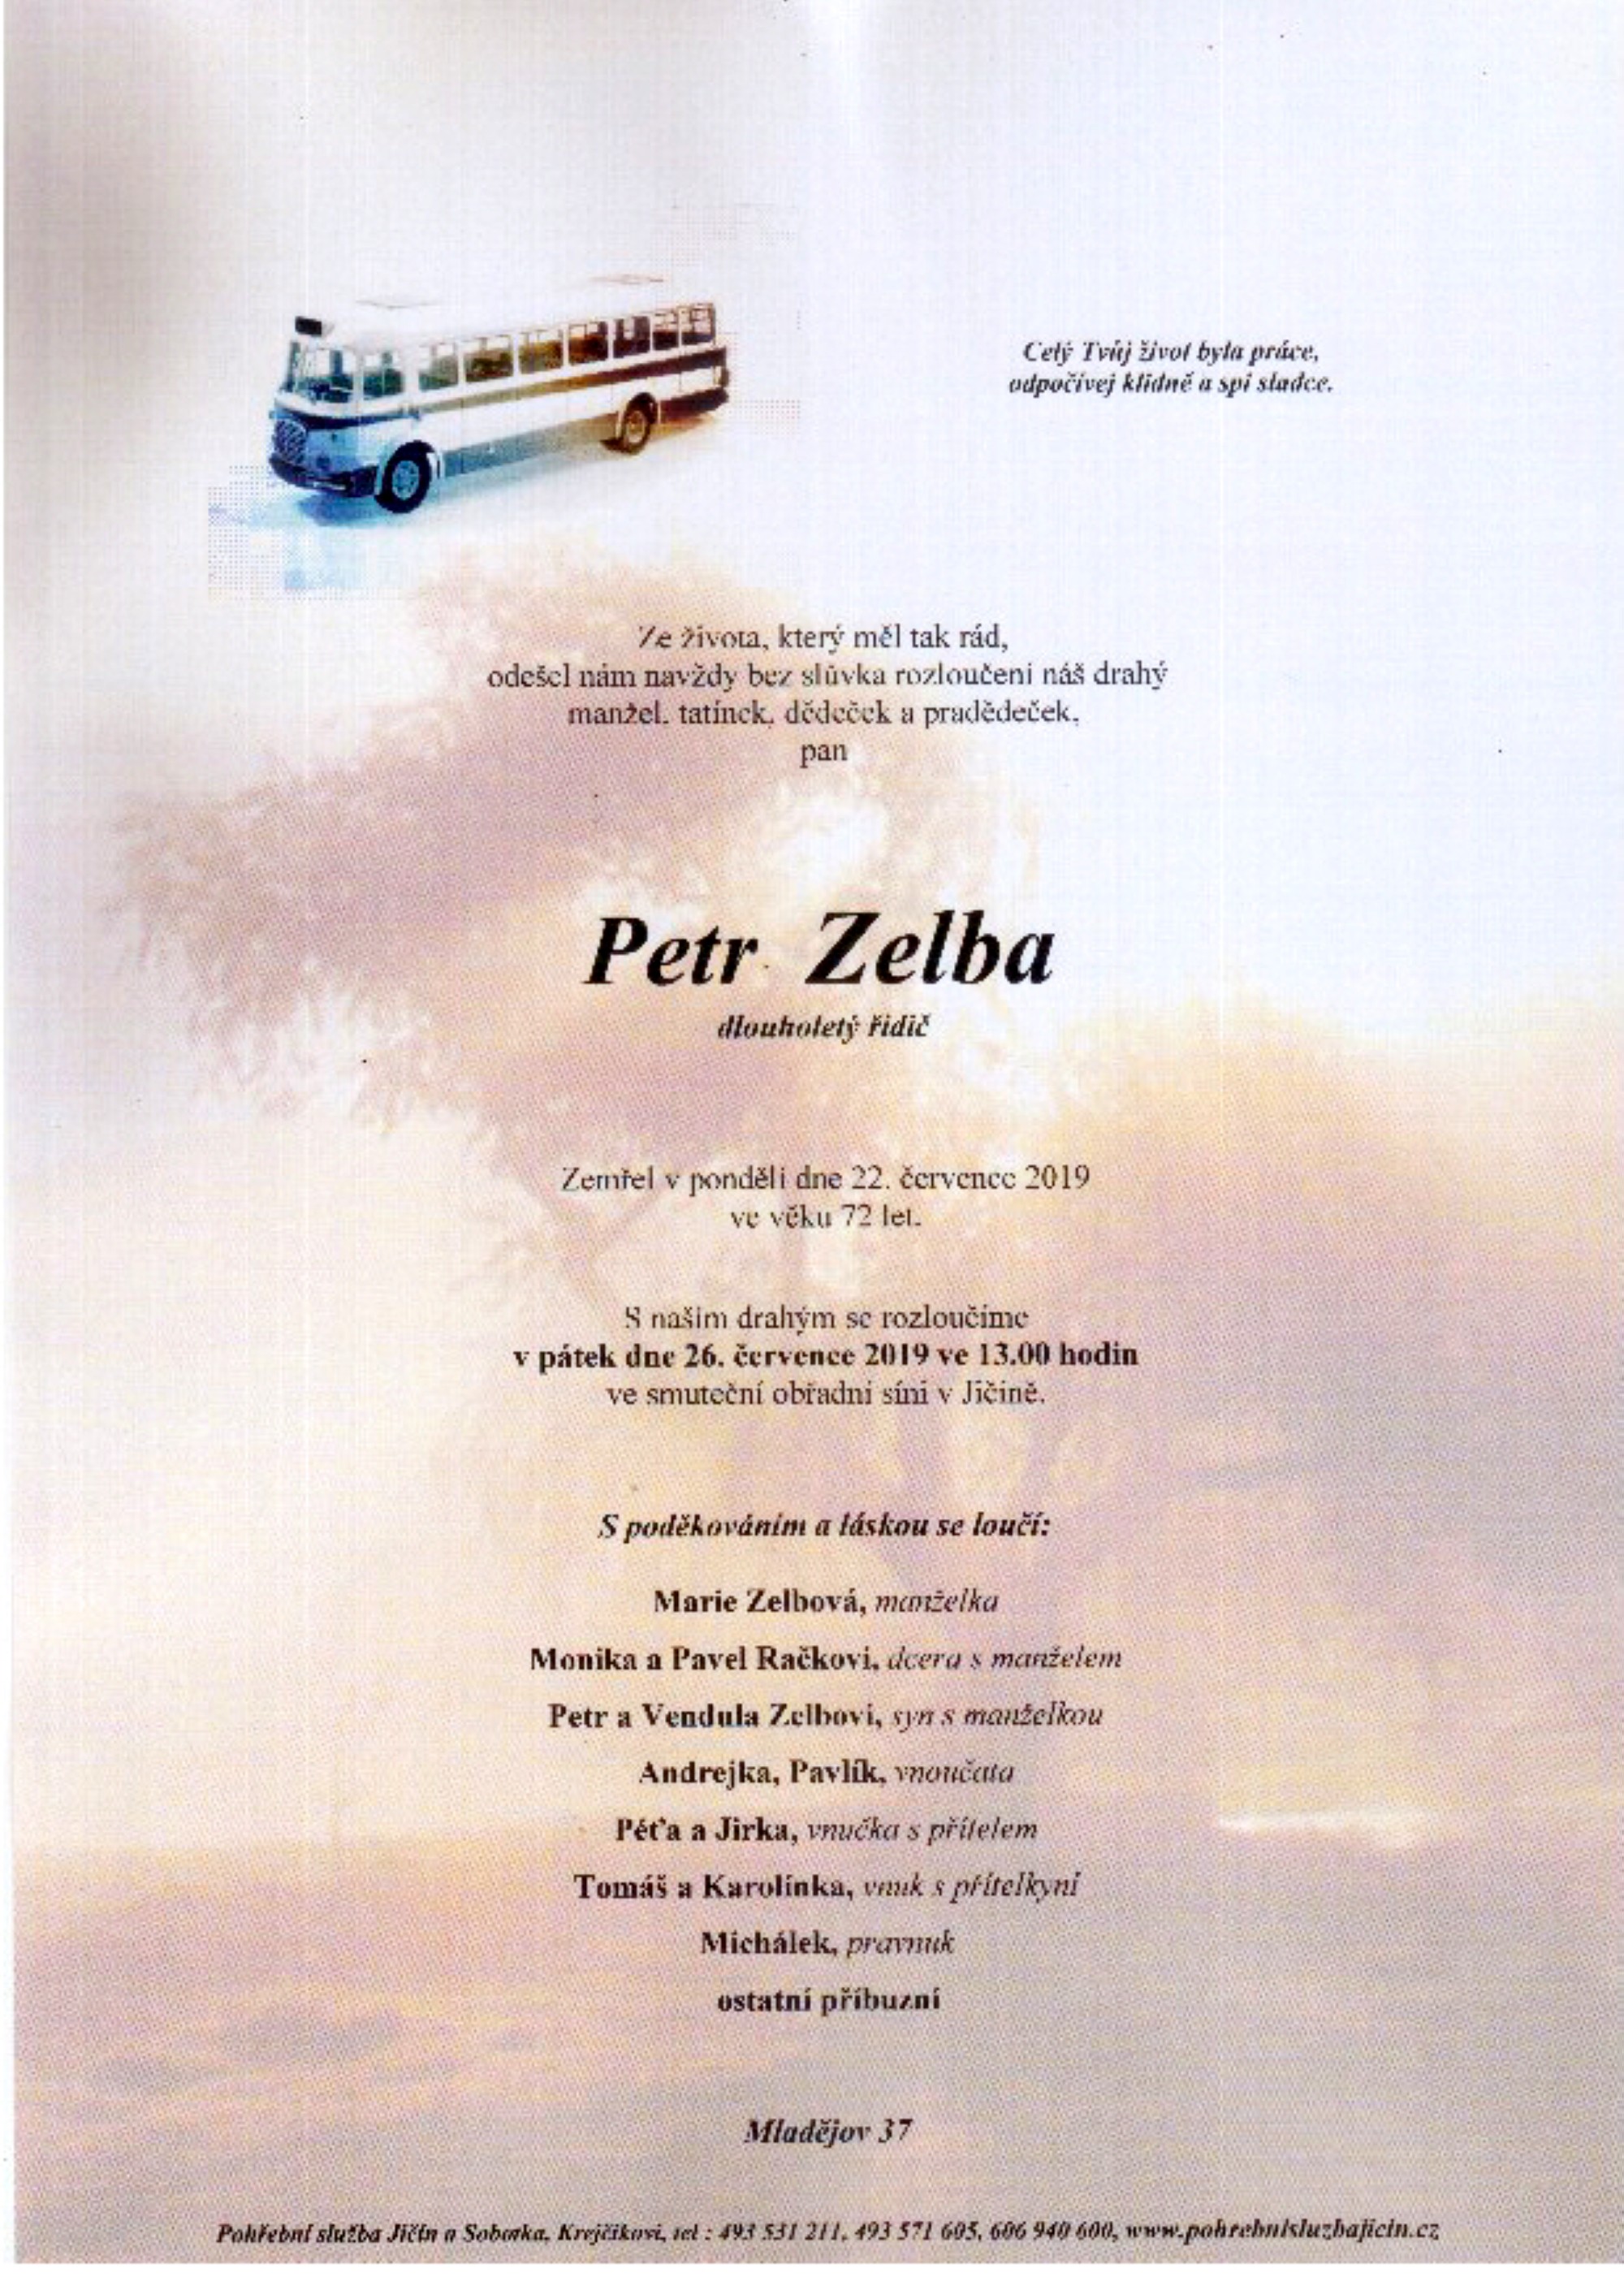 Petr Zelba